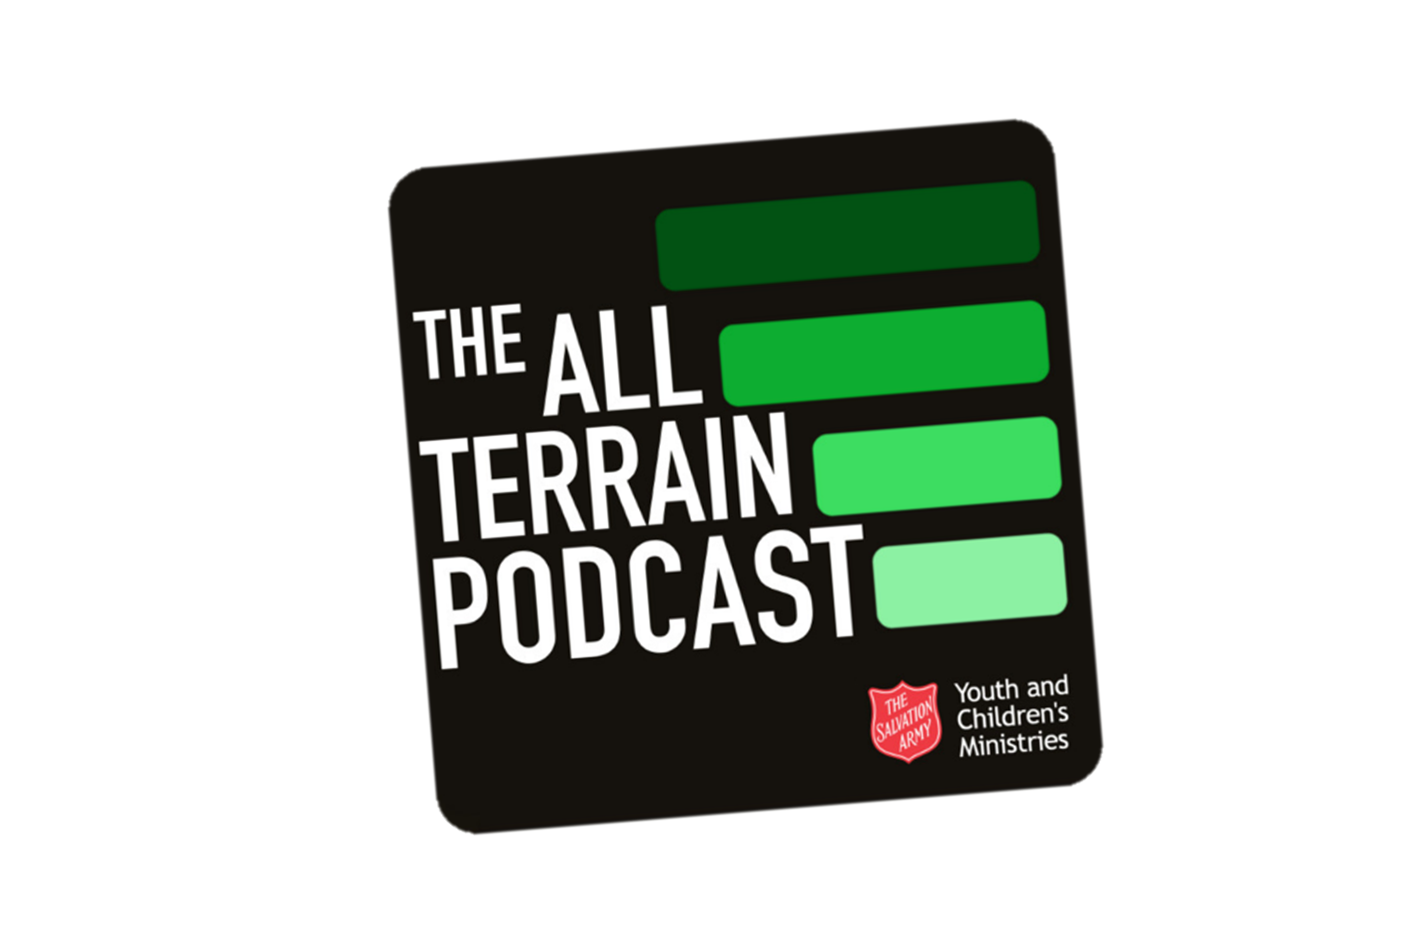 All terrain podcast thumbnail small